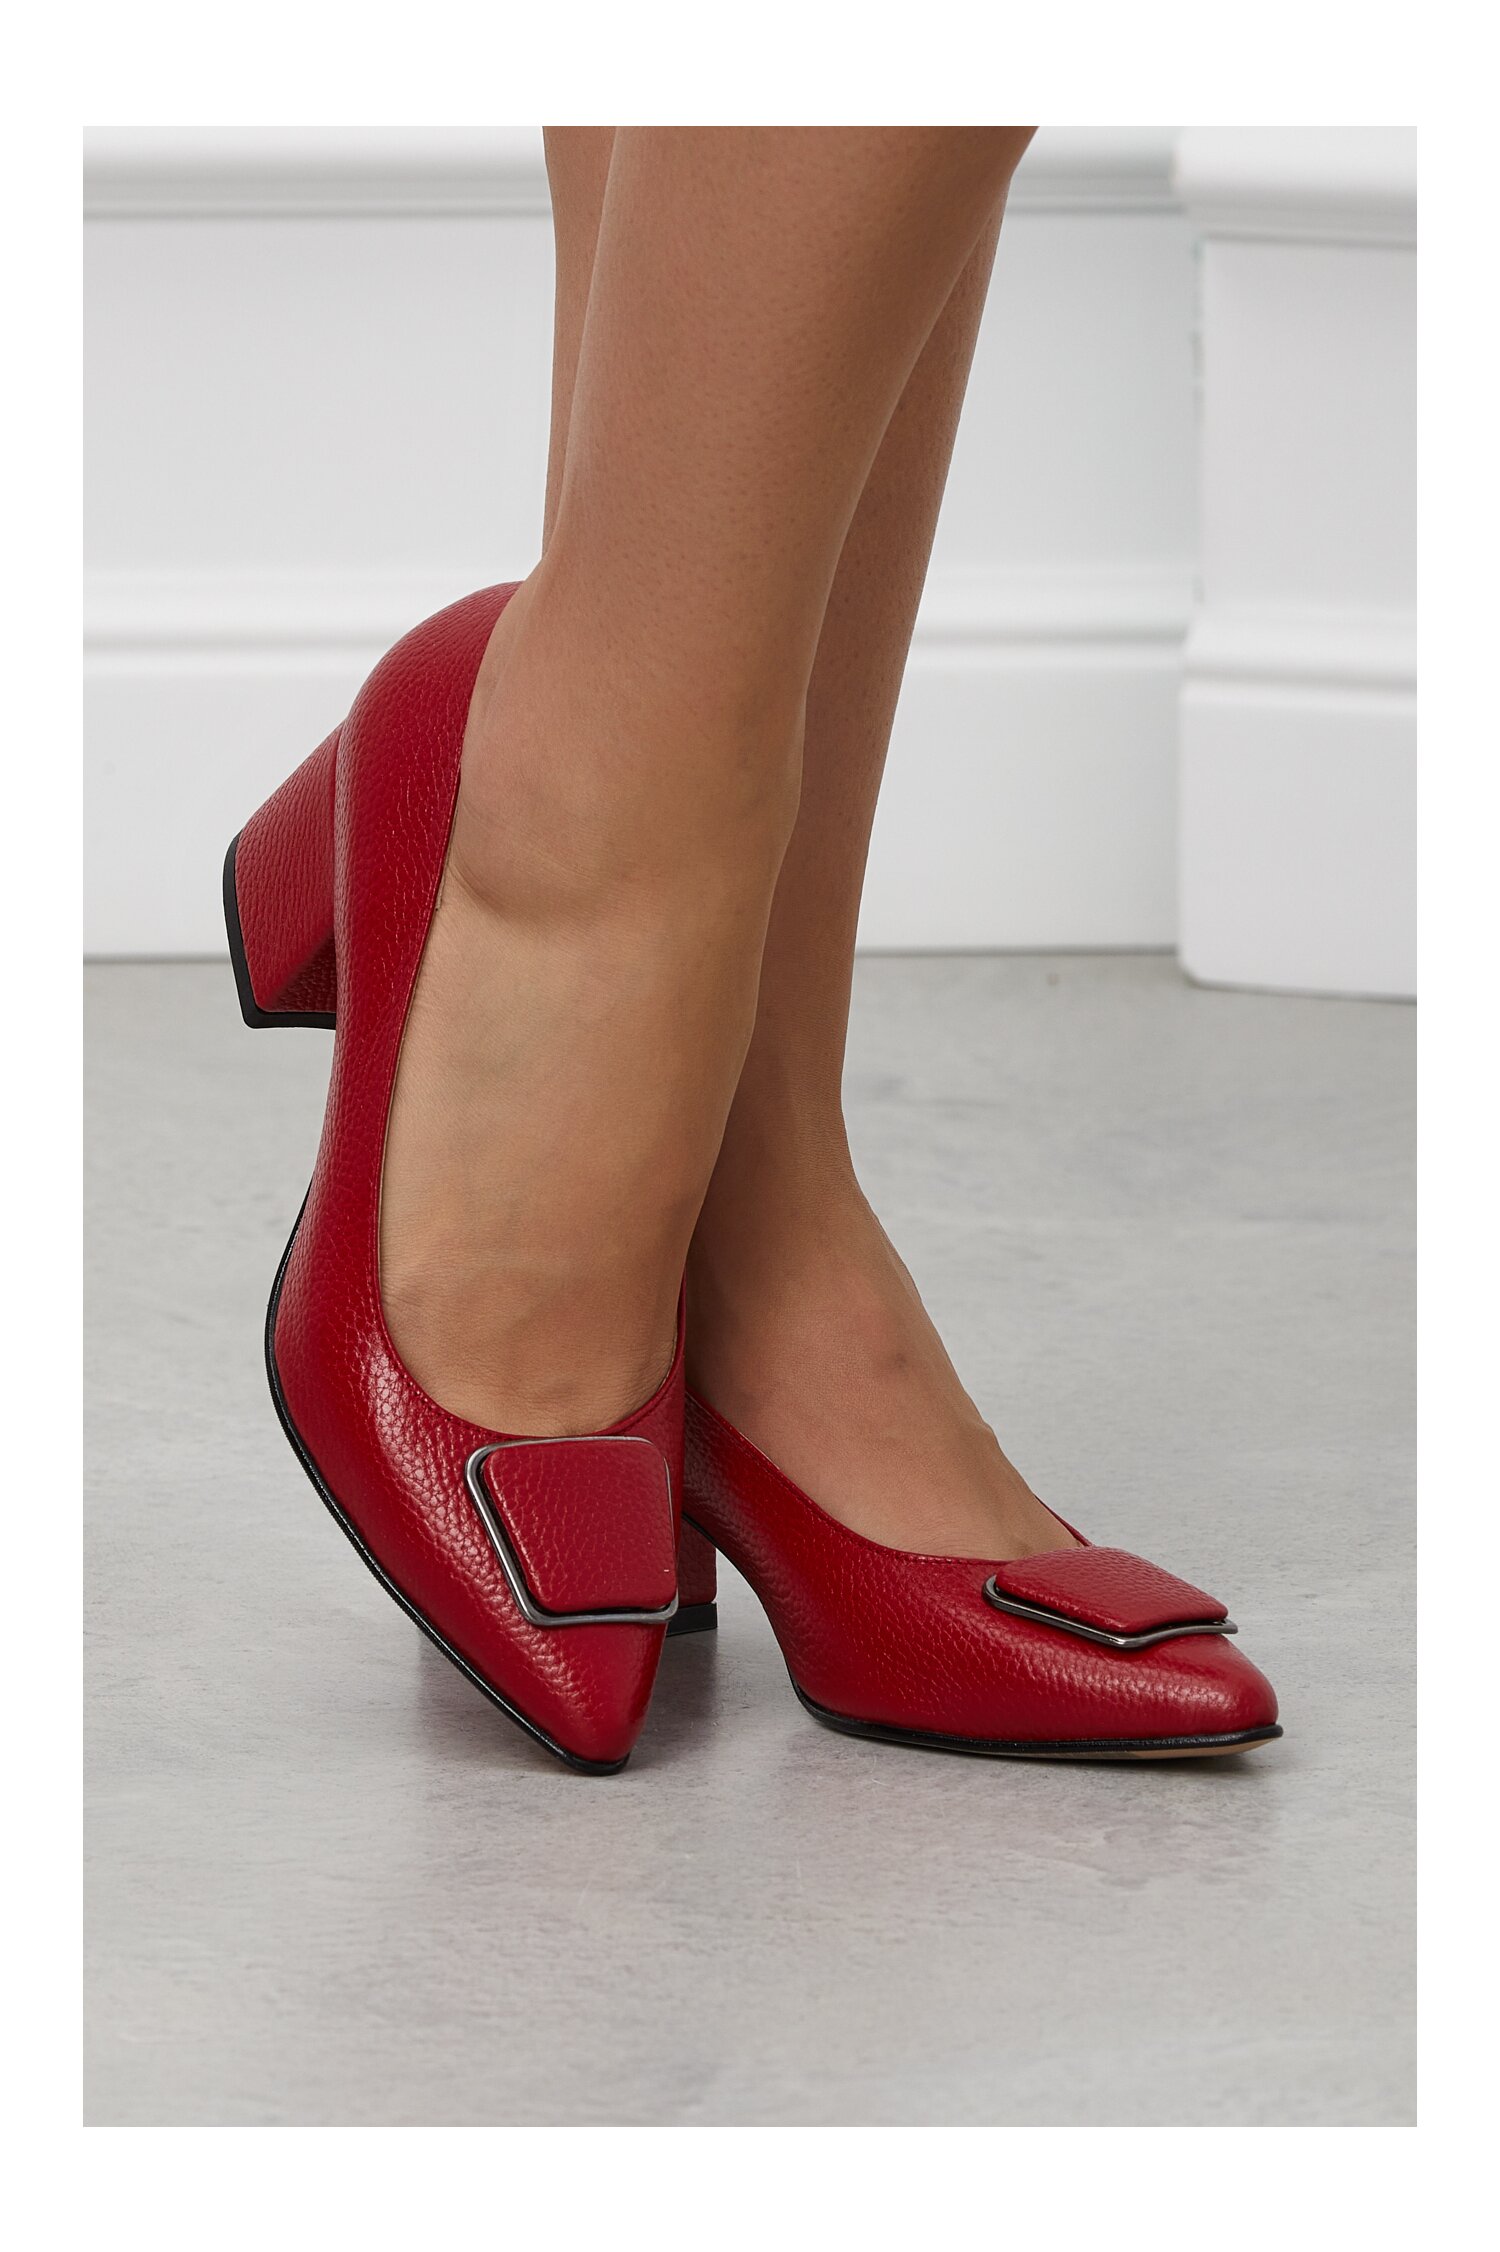 Pantofi rosu inchis cu aplicatie pe varf dyfashion.ro imagine 2022 13clothing.ro